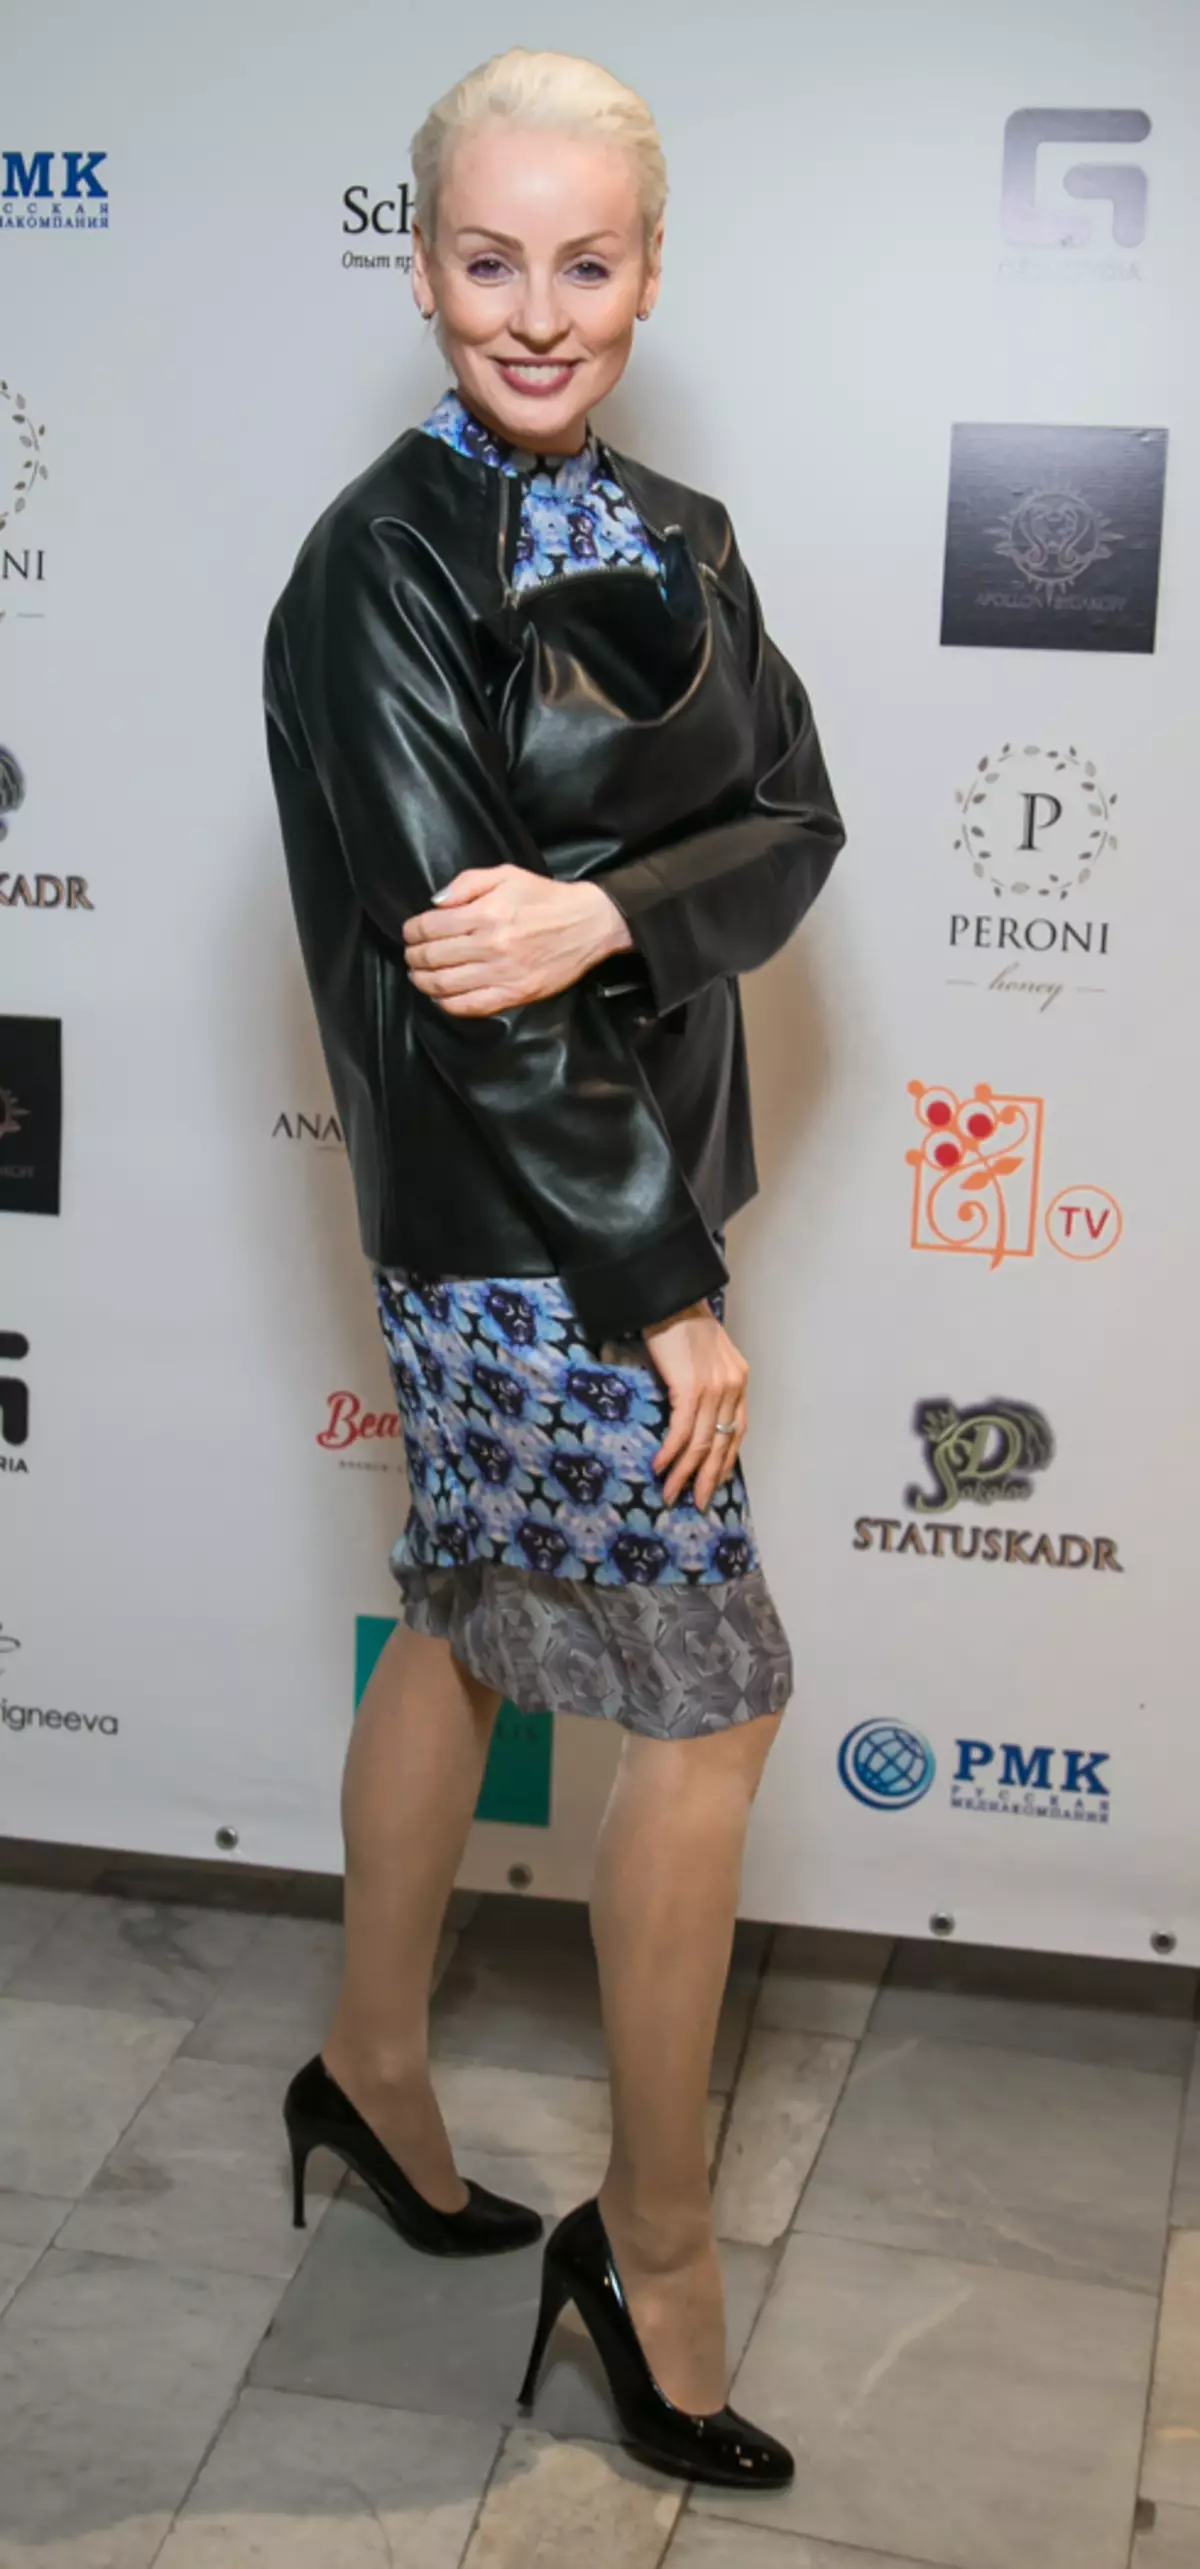 Actress Zhanna Eple